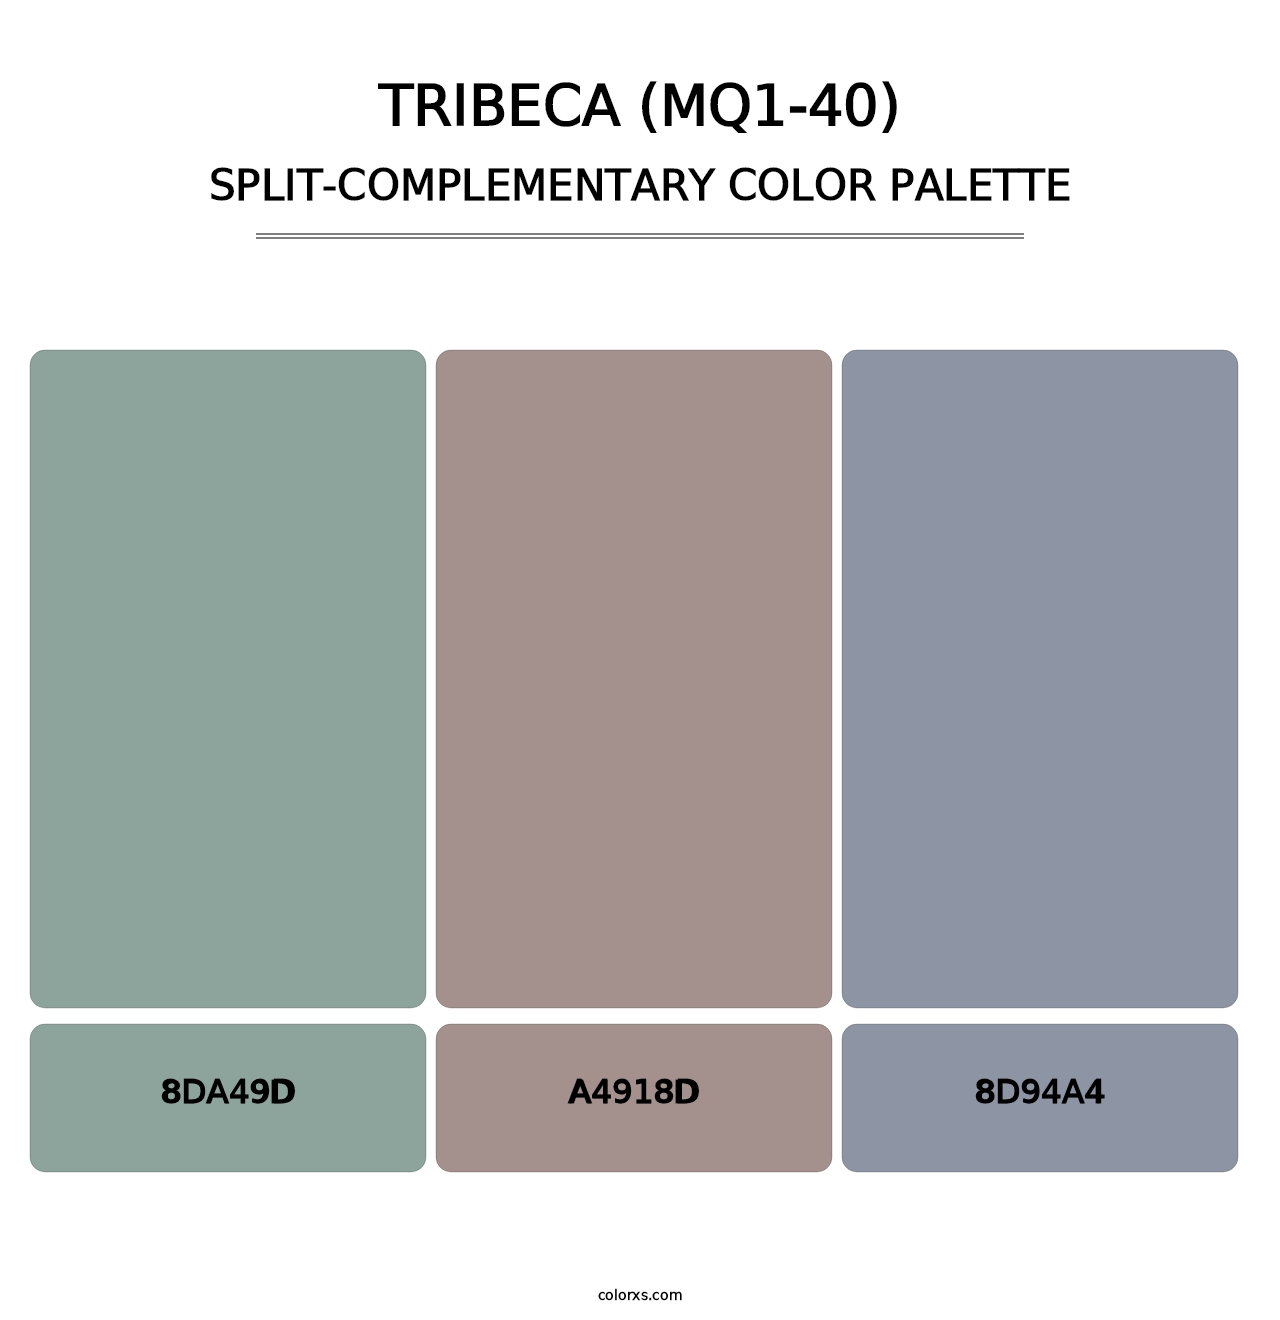 Tribeca (MQ1-40) - Split-Complementary Color Palette